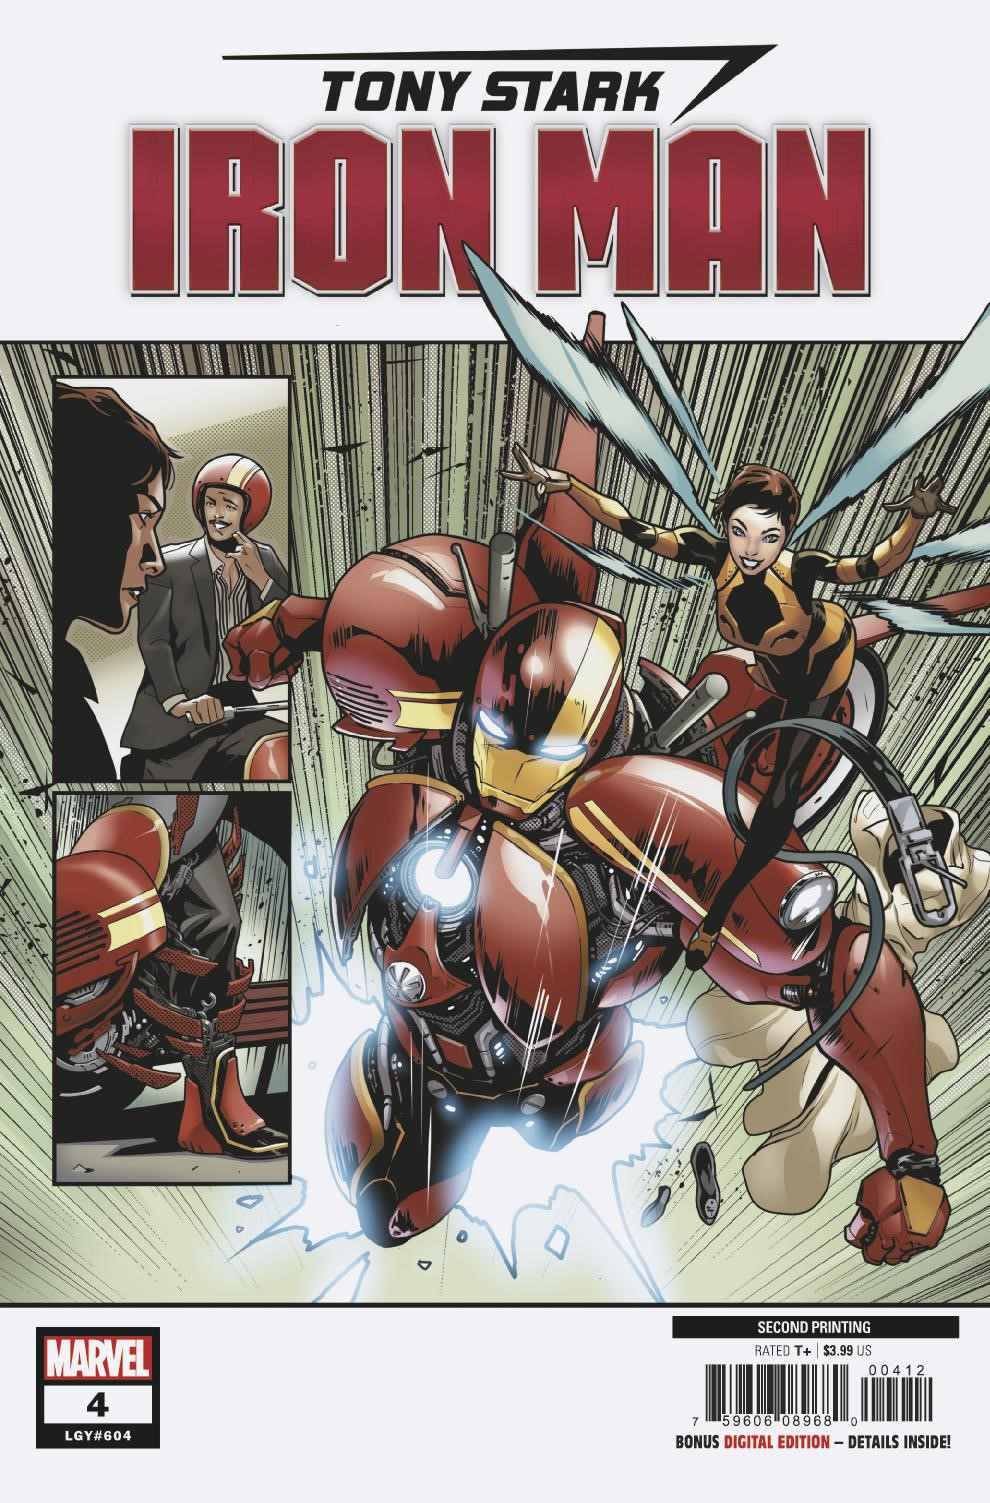 Tony Stark: Iron Man Vol 1 4 | Marvel Database | Fandom